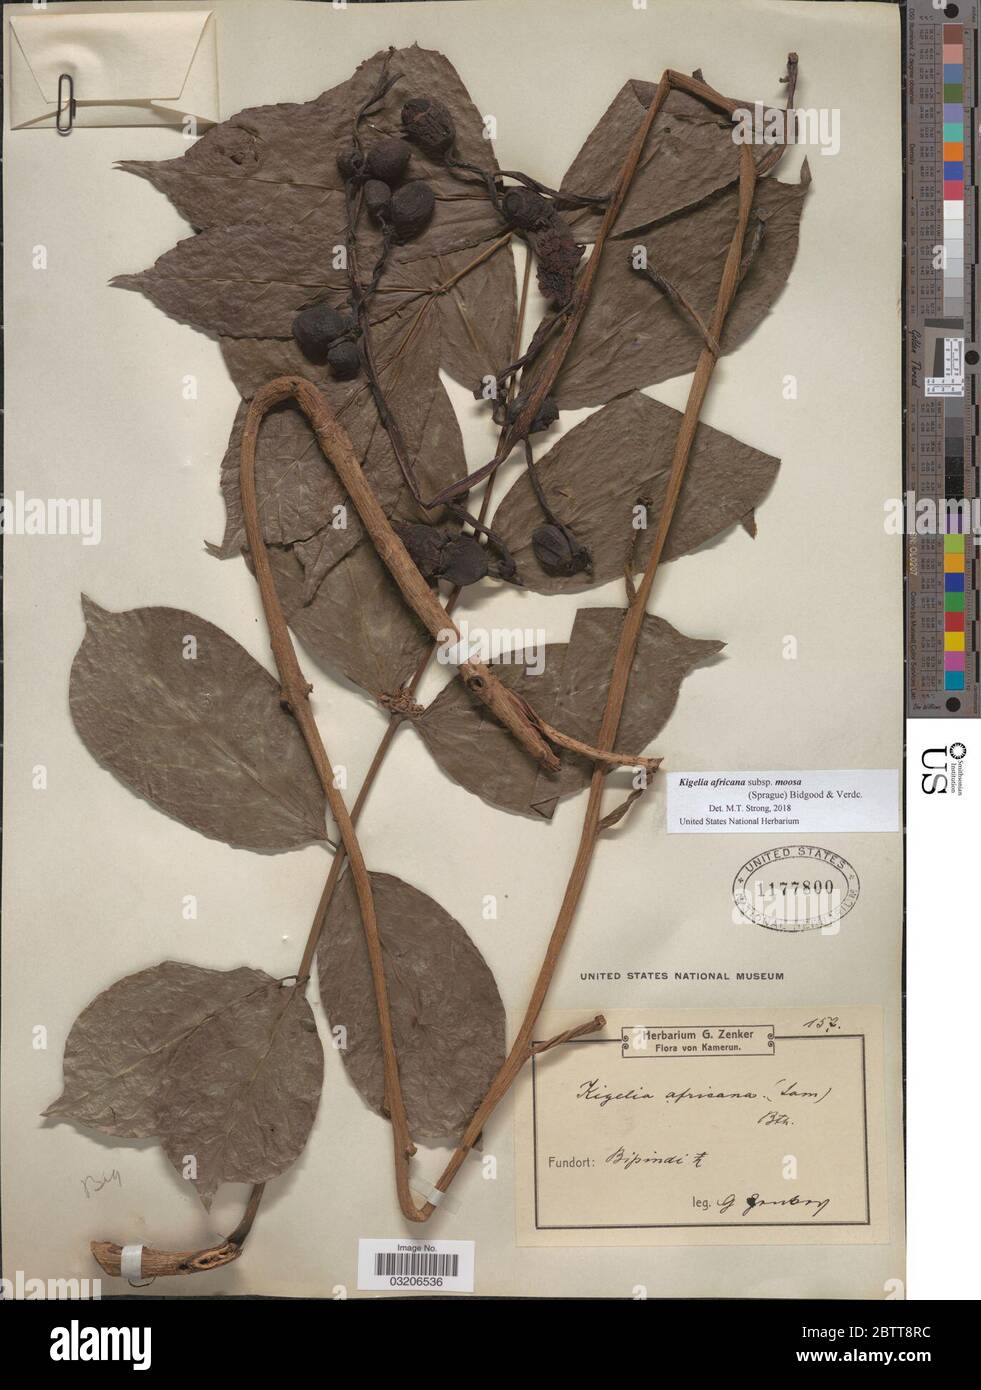 Kigelia africana subsp moosa Sprague Bidgood Verdc. Stock Photo